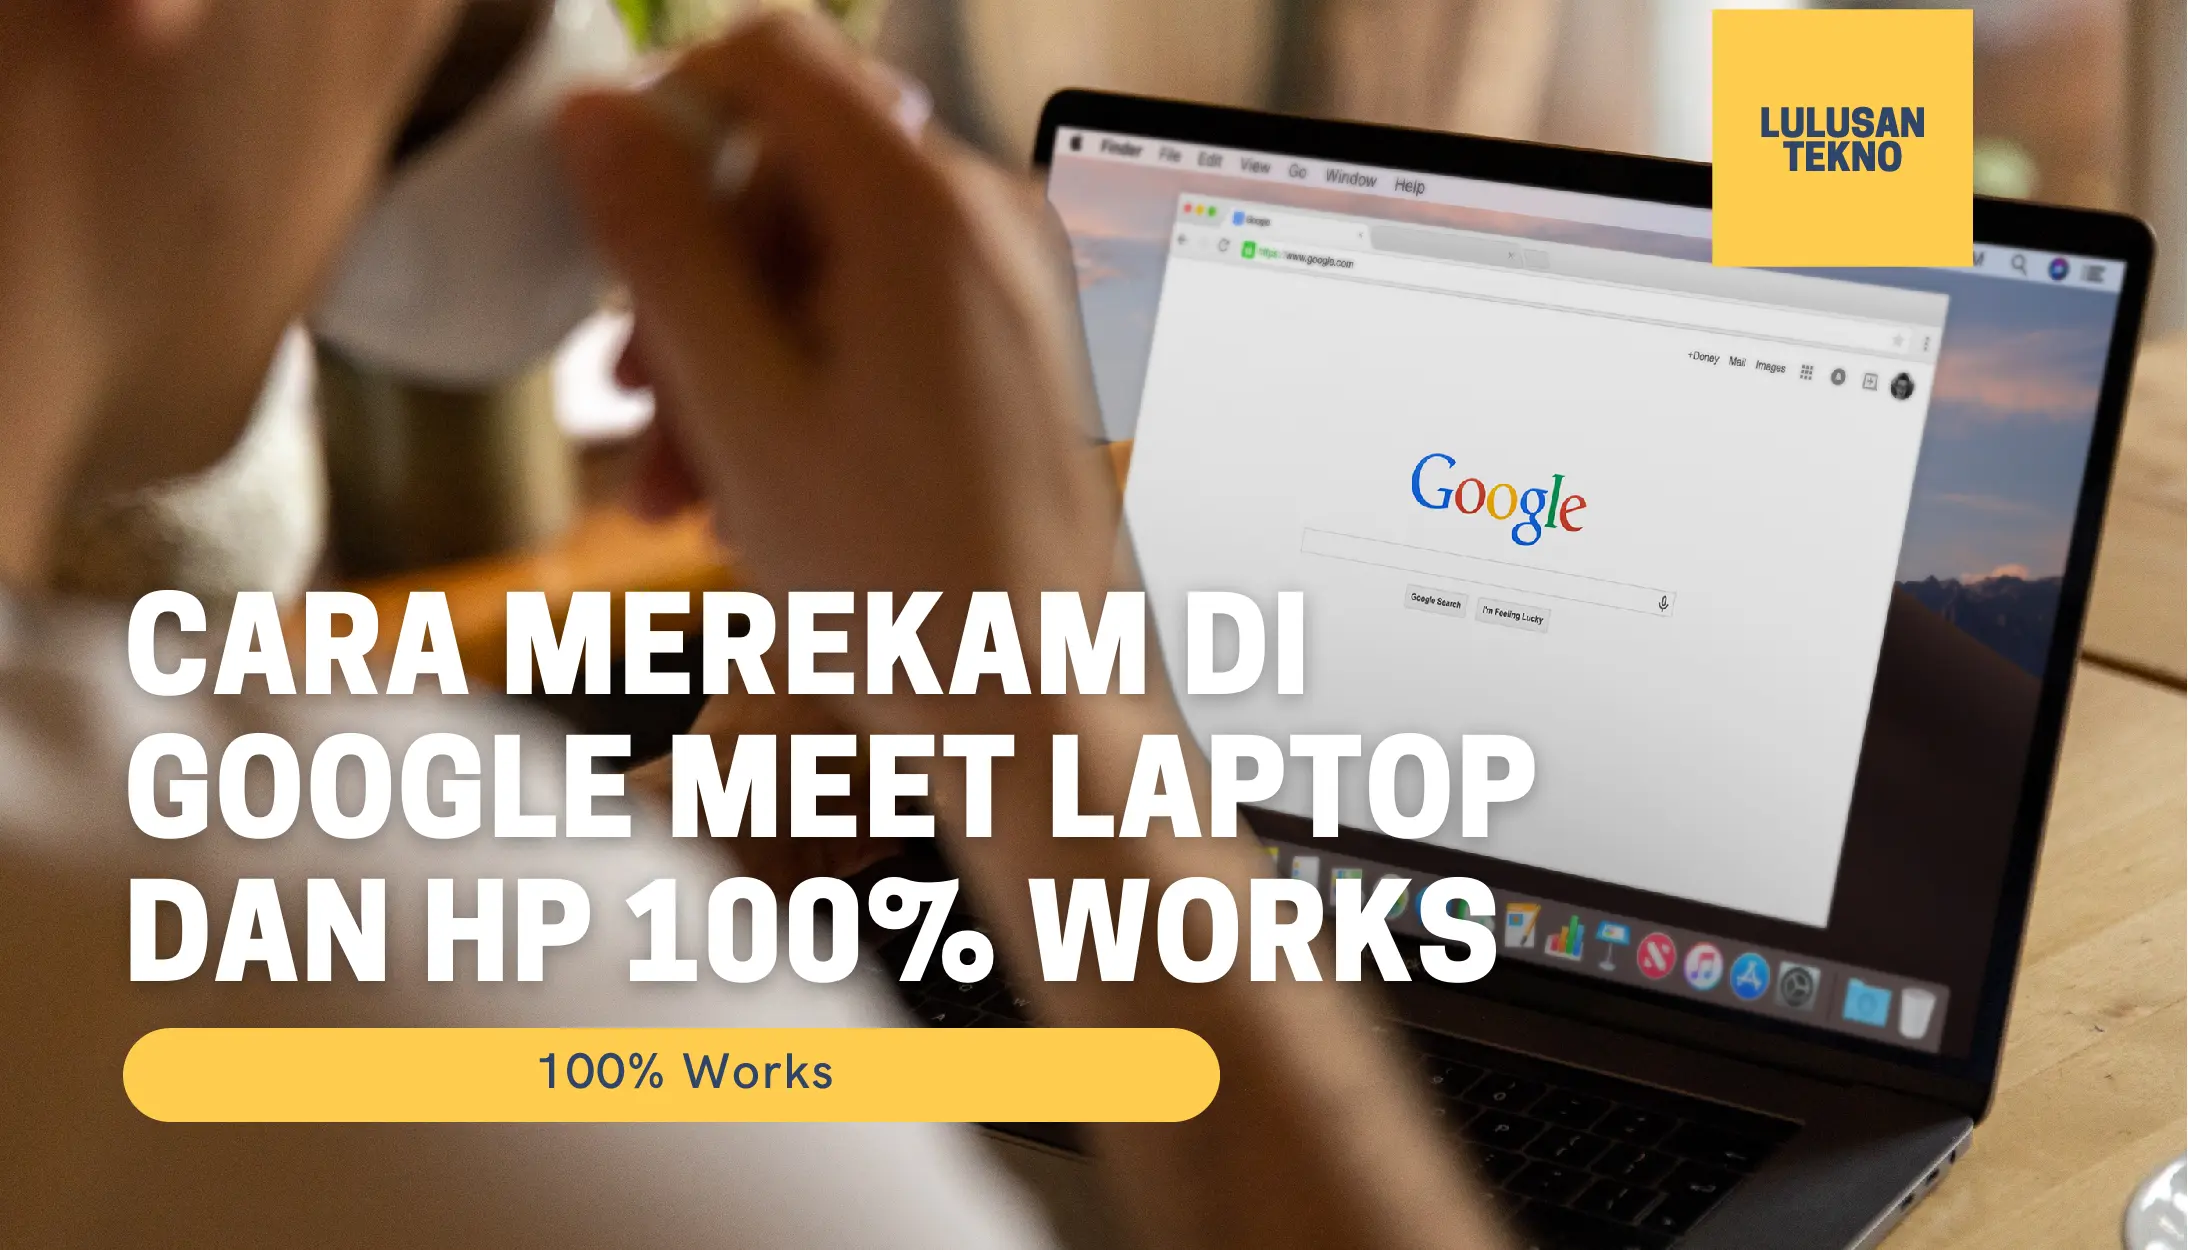 Cara Merekam di Google Meet Laptop dan HP